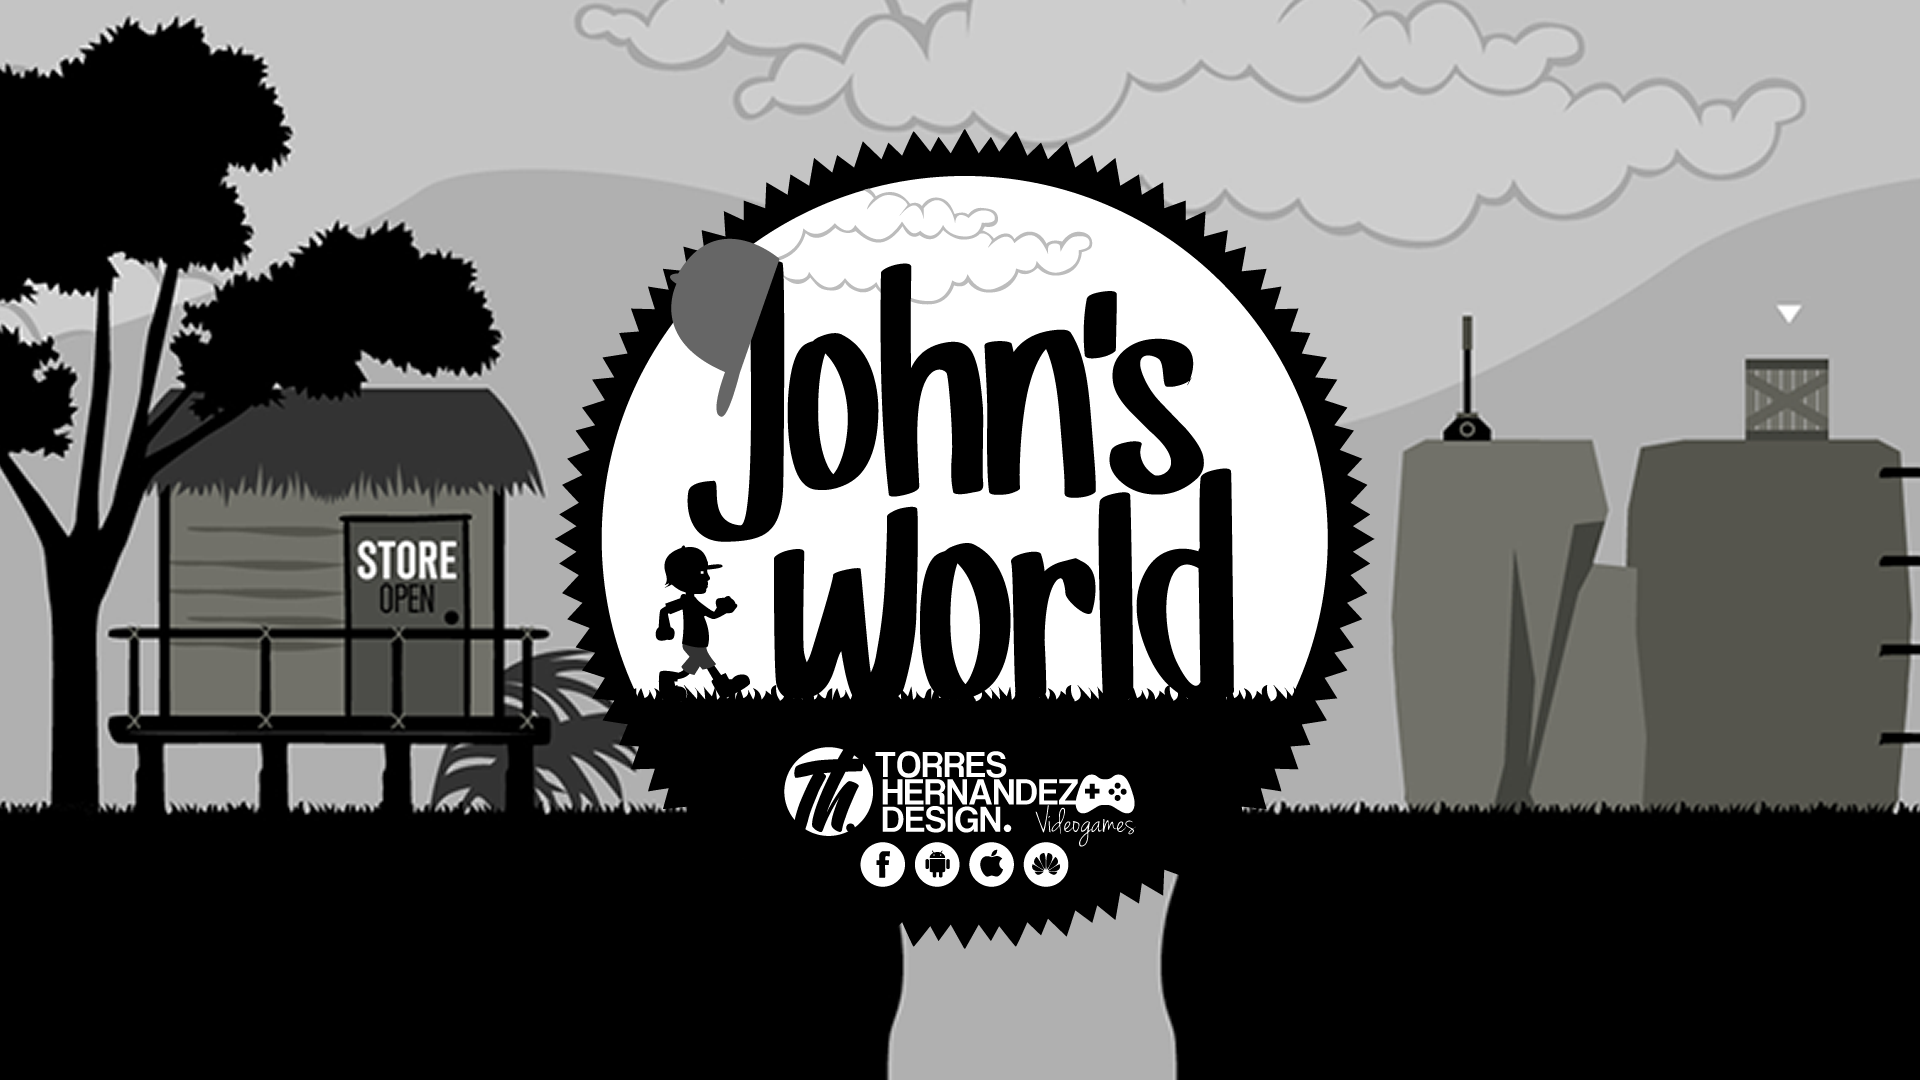 John's World